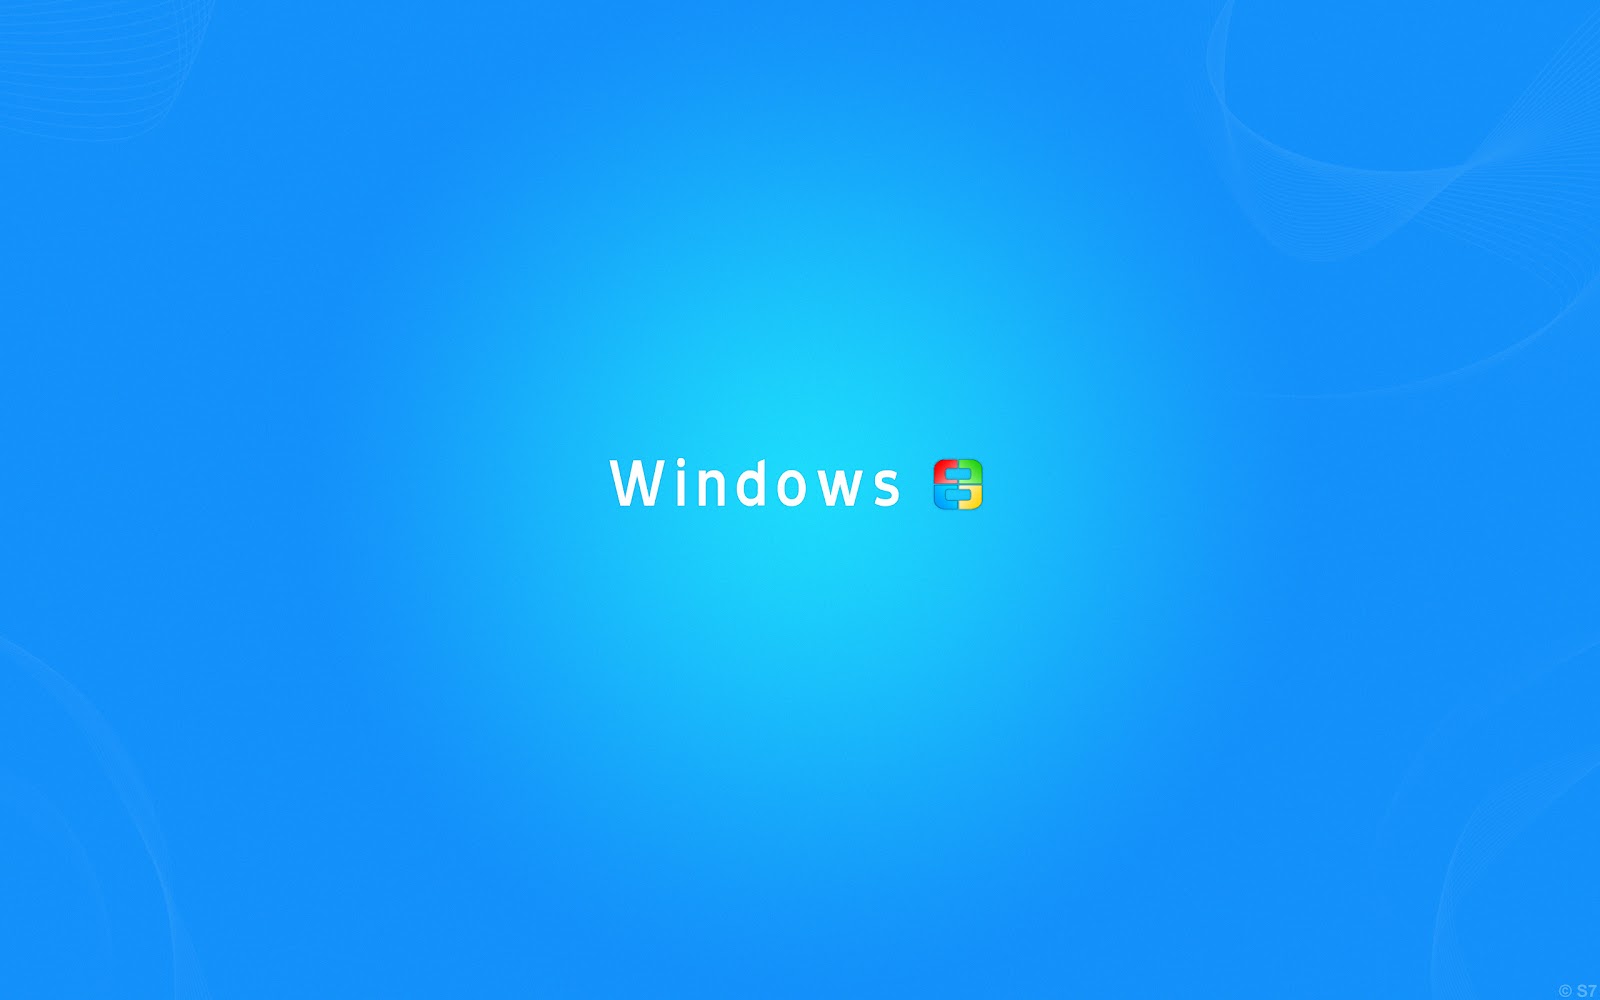 Window 8 Official Wallpaper Microsoft windows 8 is latest